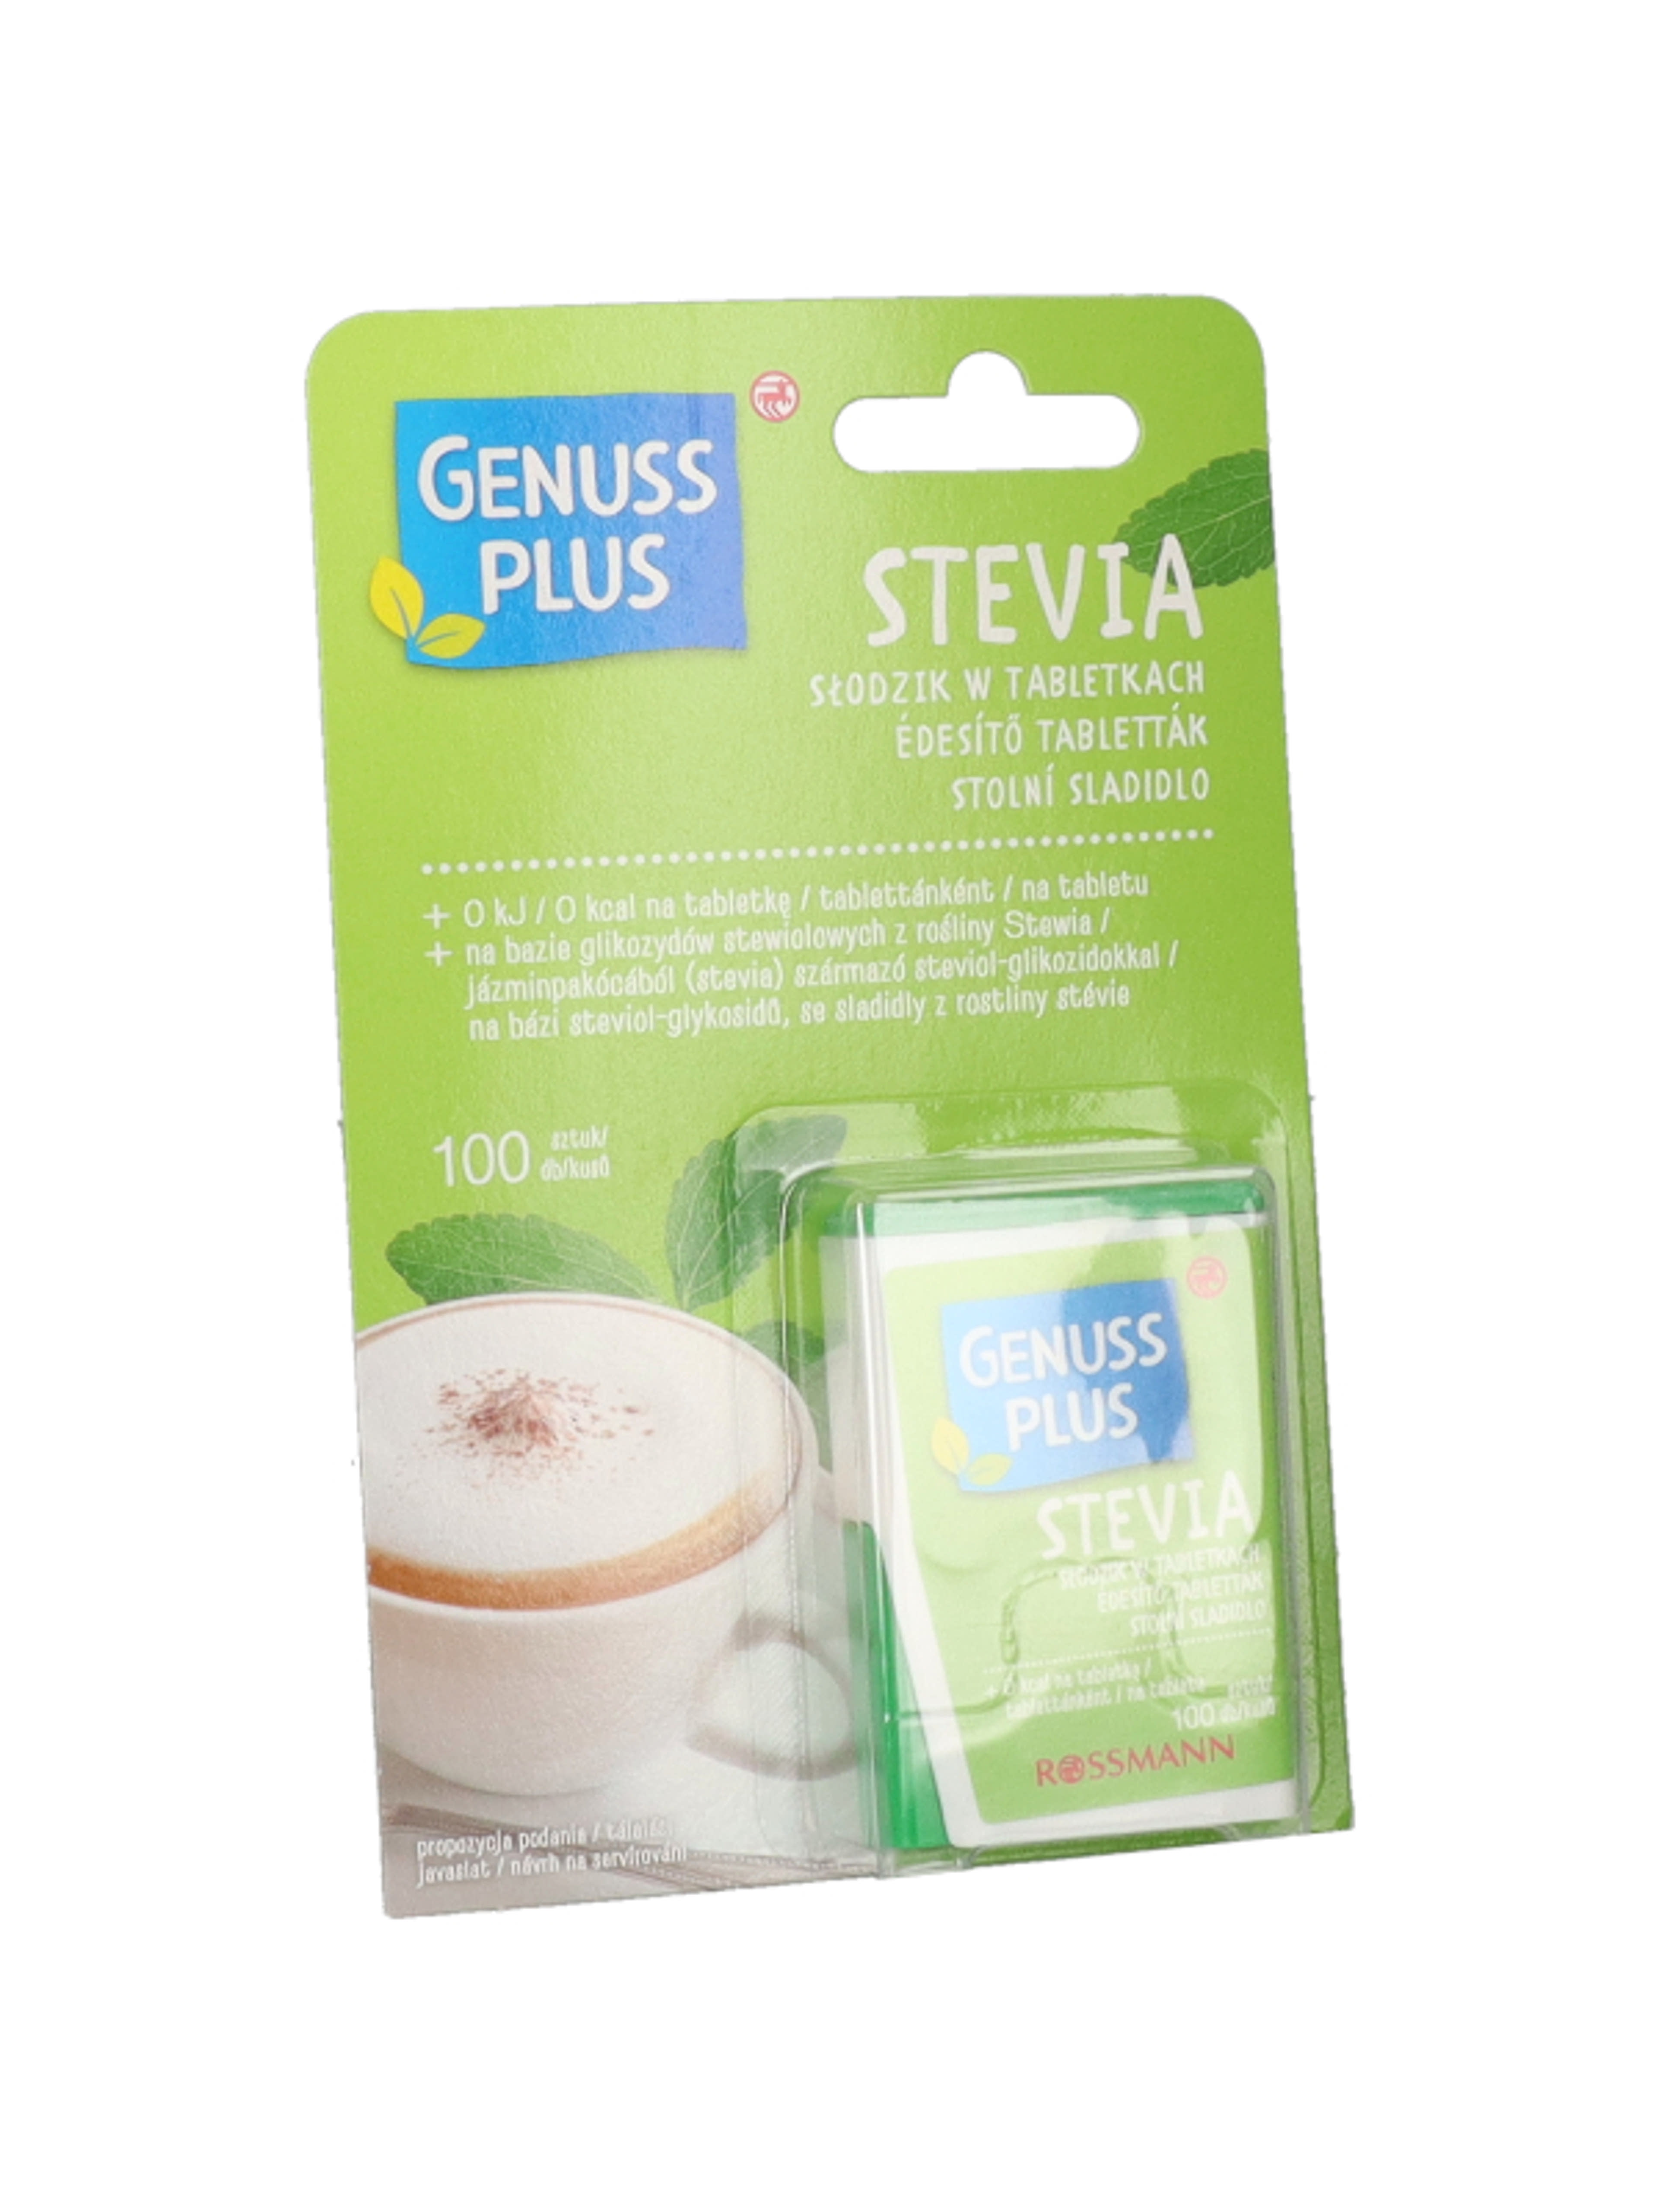 Genuss plus stevia édesítő tabletta - 100 db-3